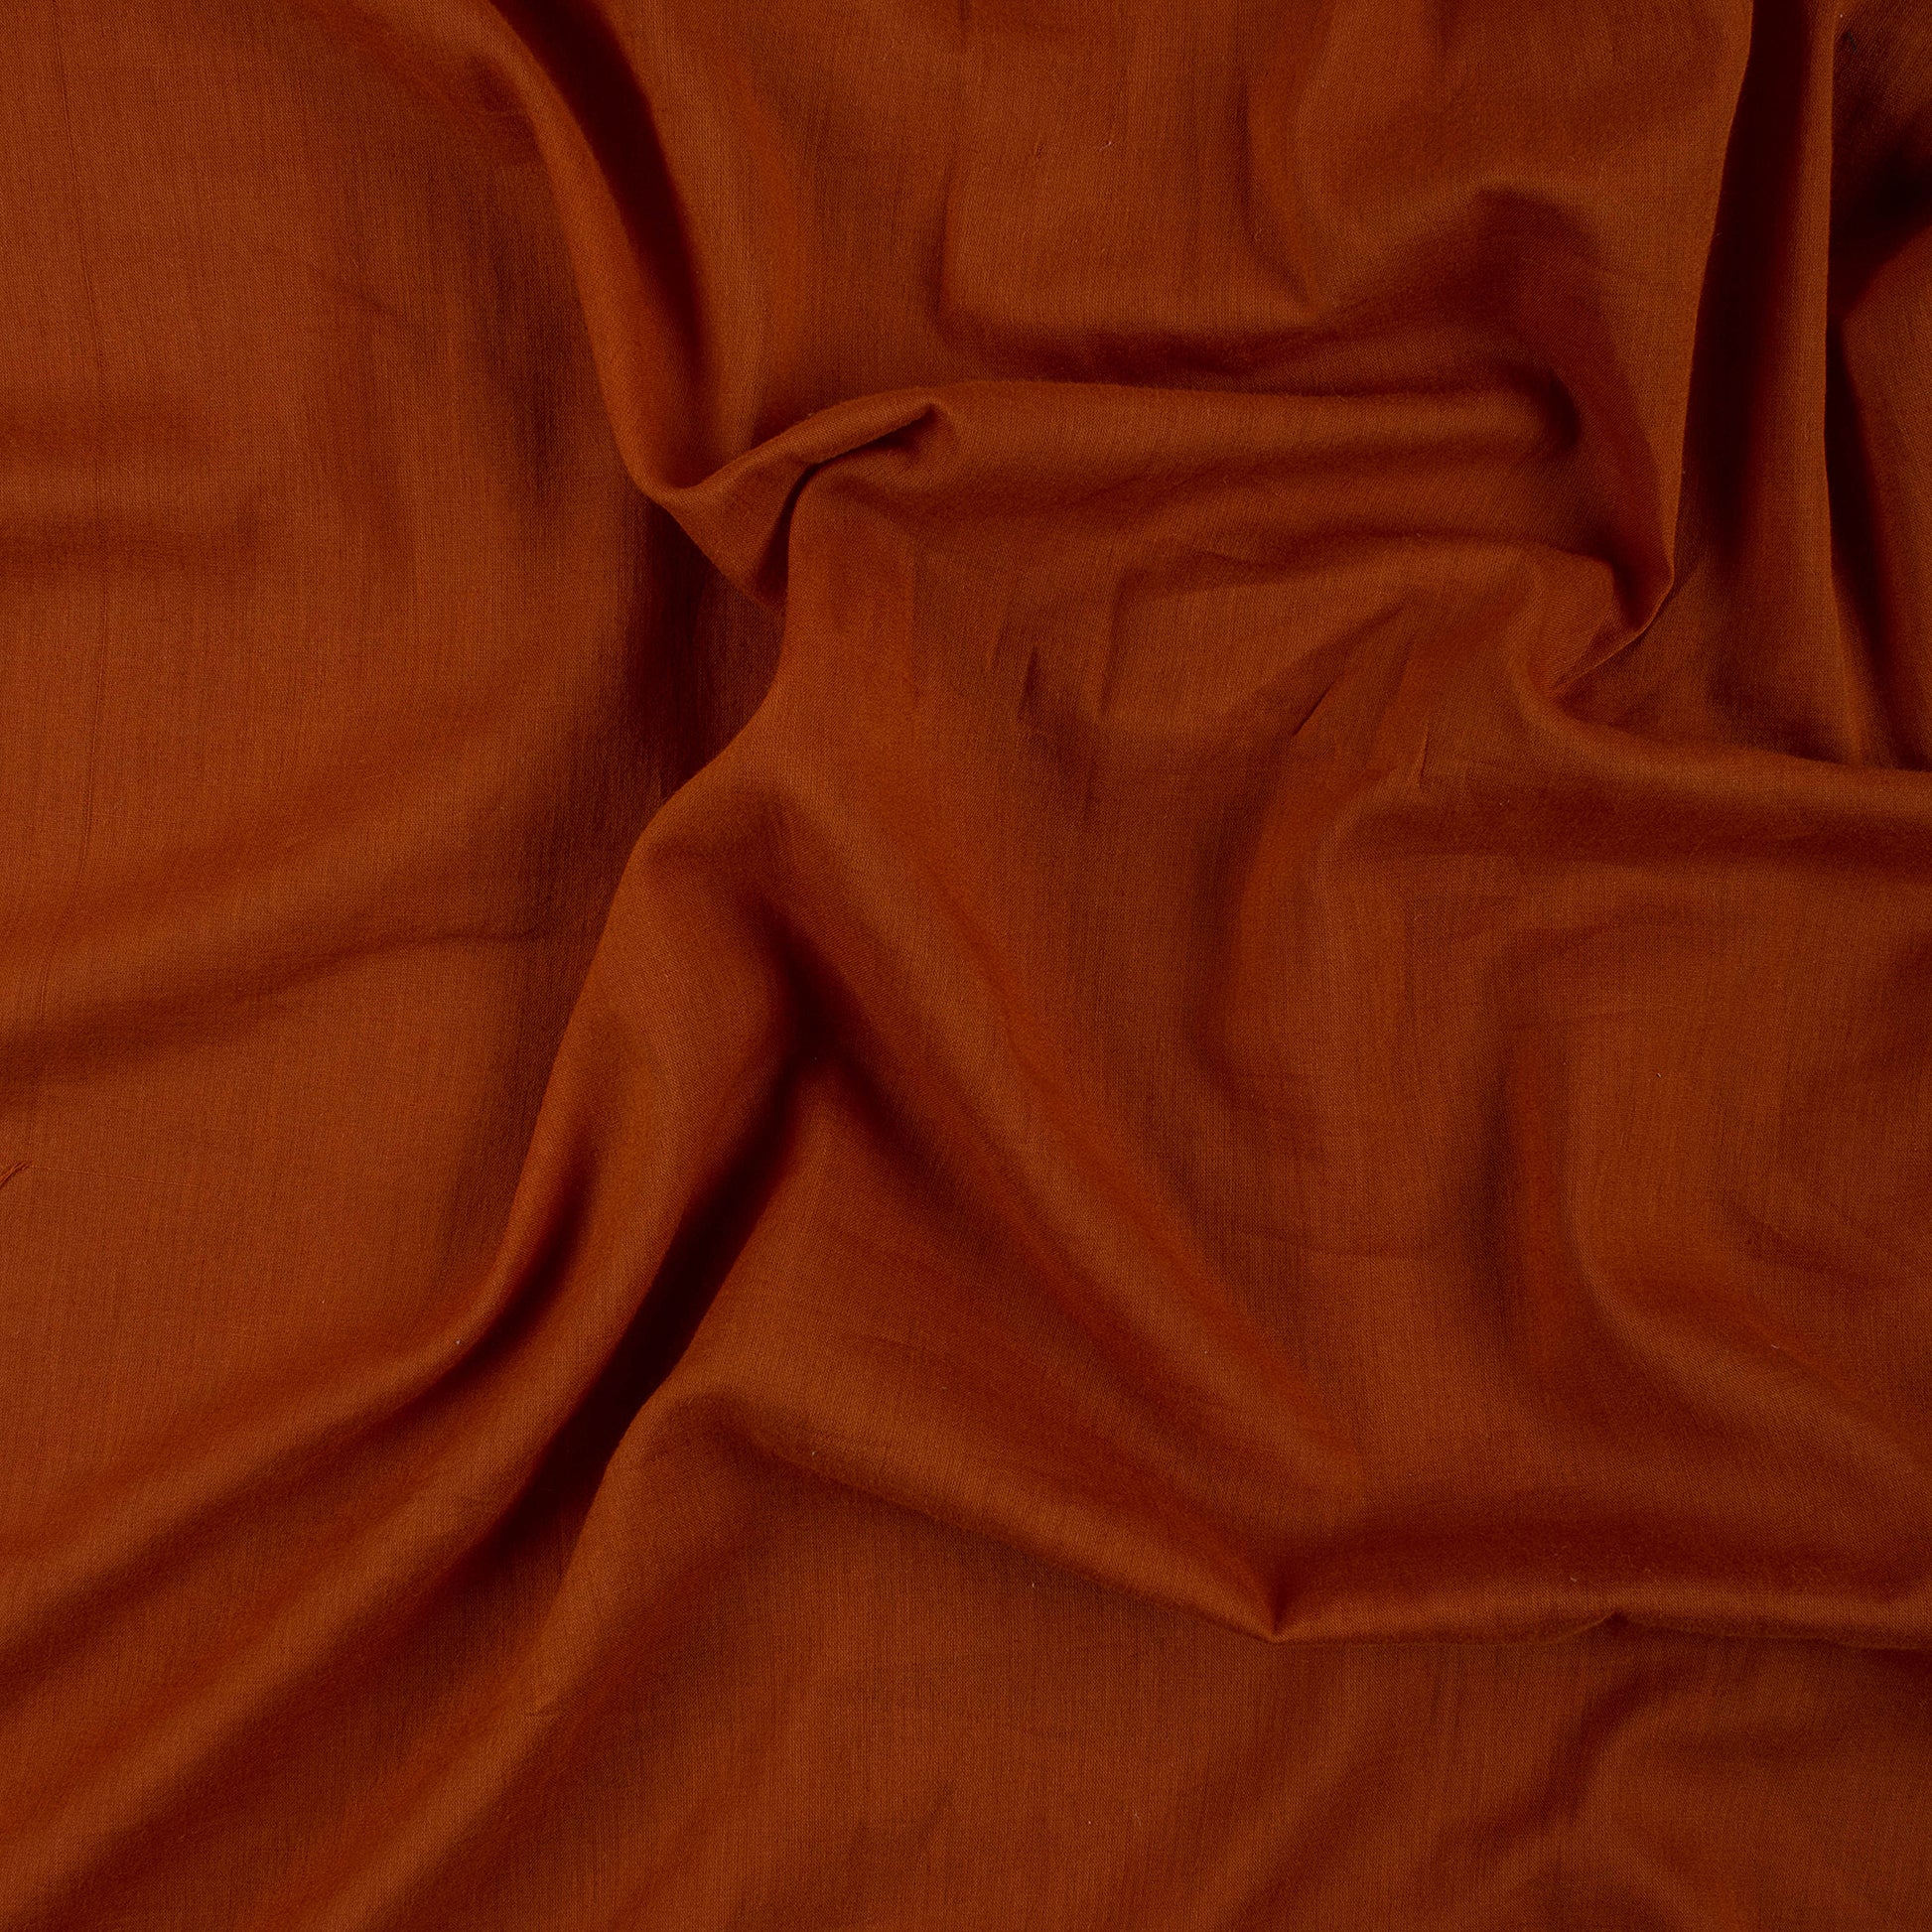 Orange Dyed 100% Cotton Plain Fabric Online